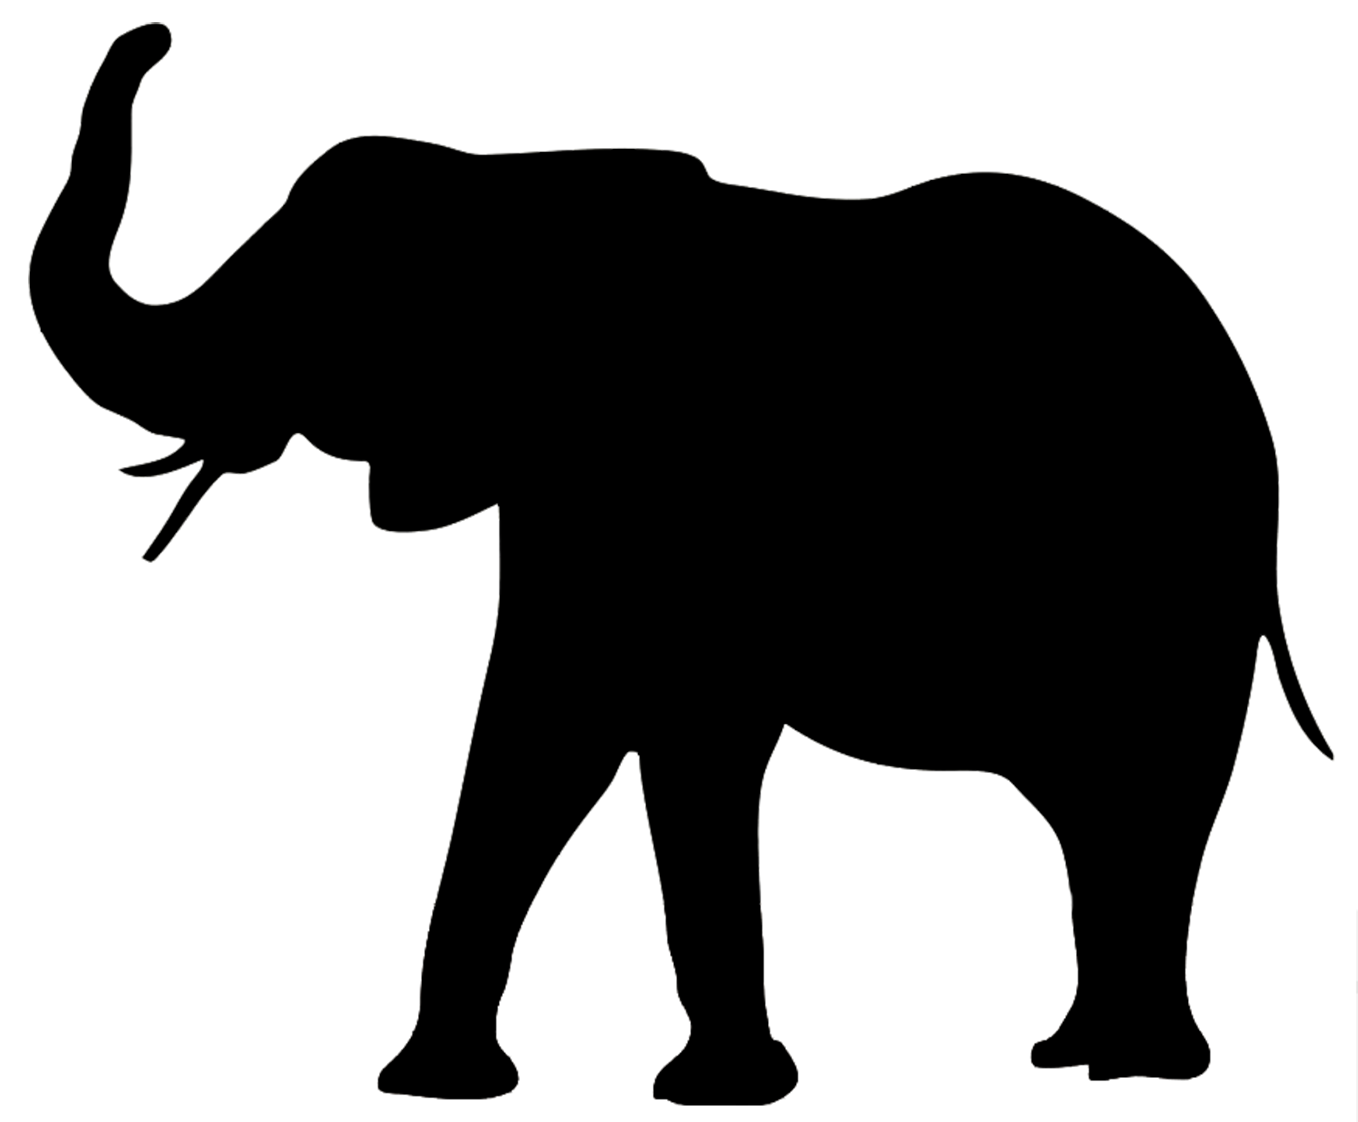 Elephant Silhouette Clip Art 